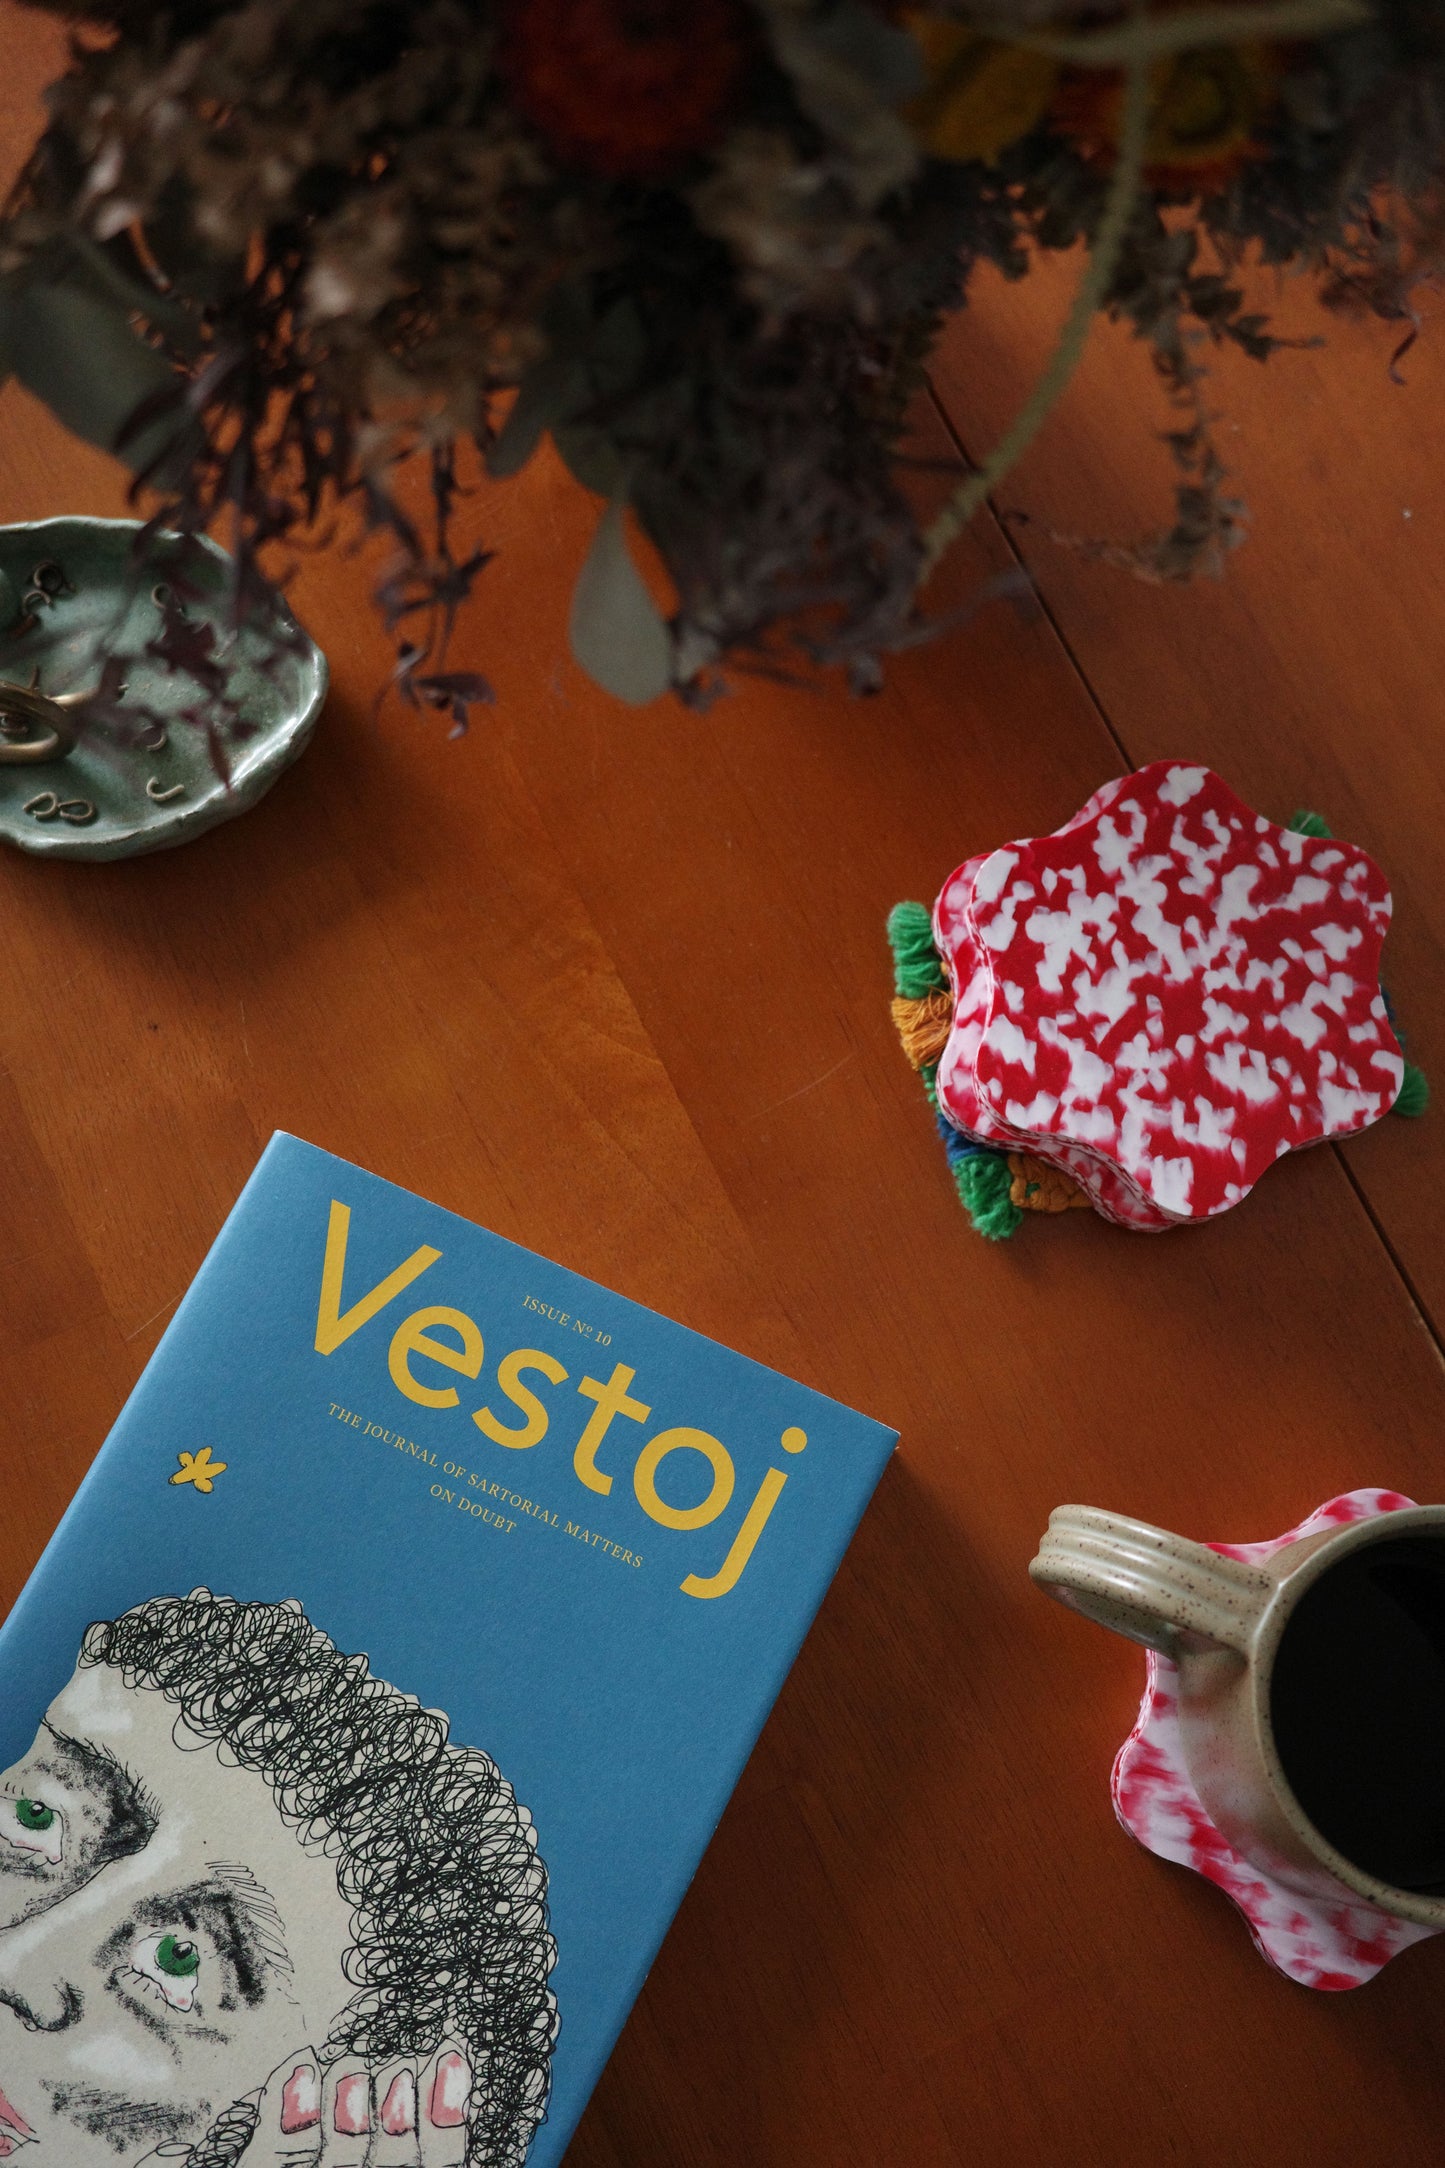 Vestoj Magazine